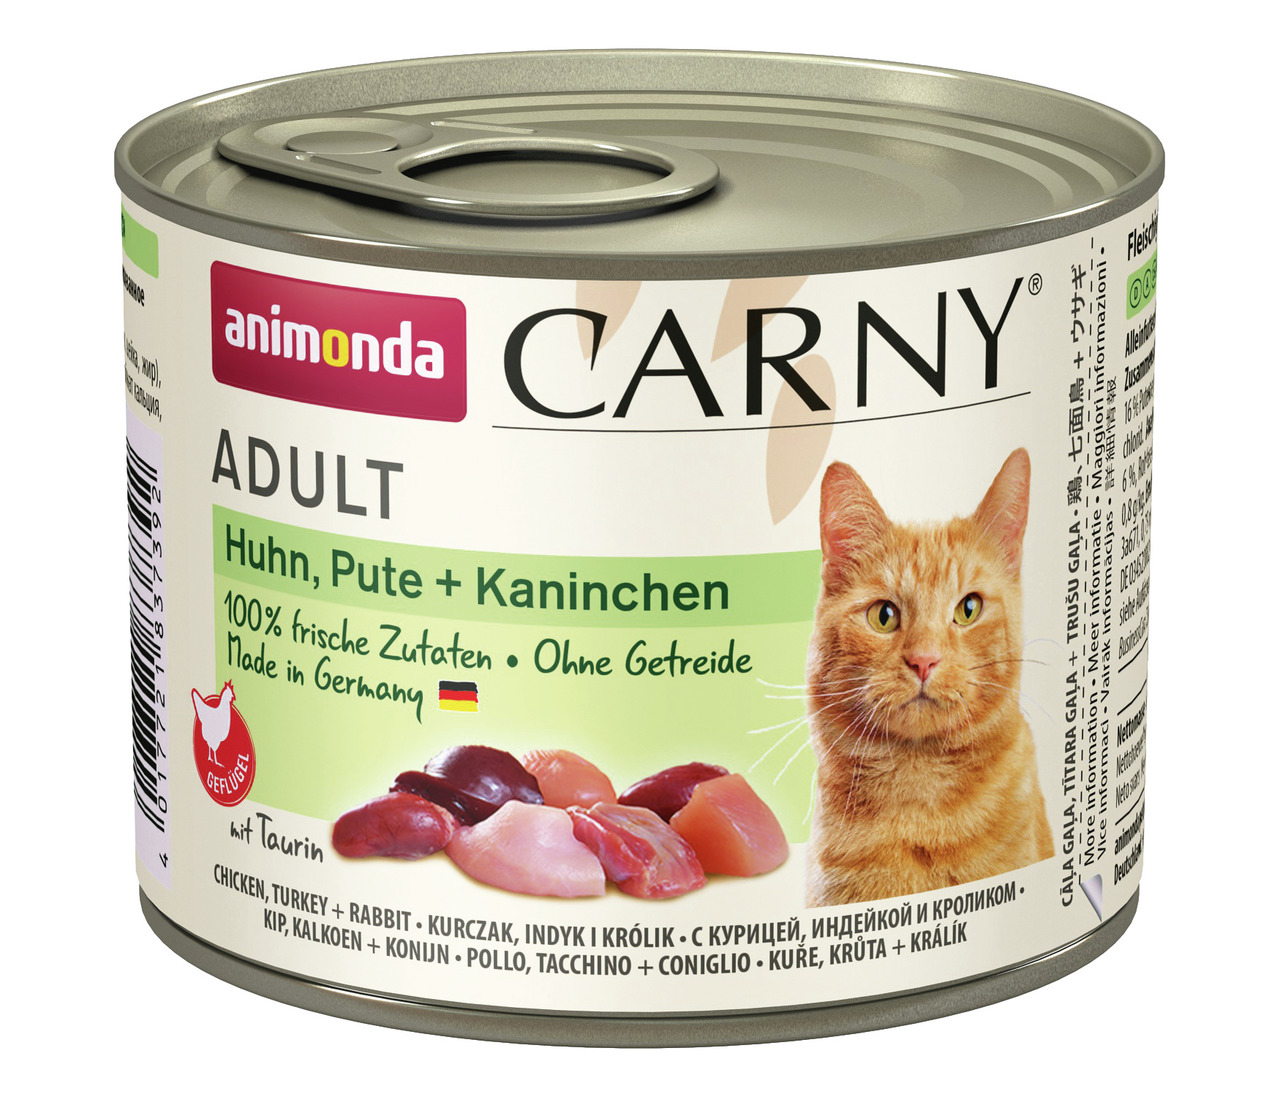 Animonda Carny Adult Huhn, Pute + Kaninchen Katzen Nassfutter 200 g